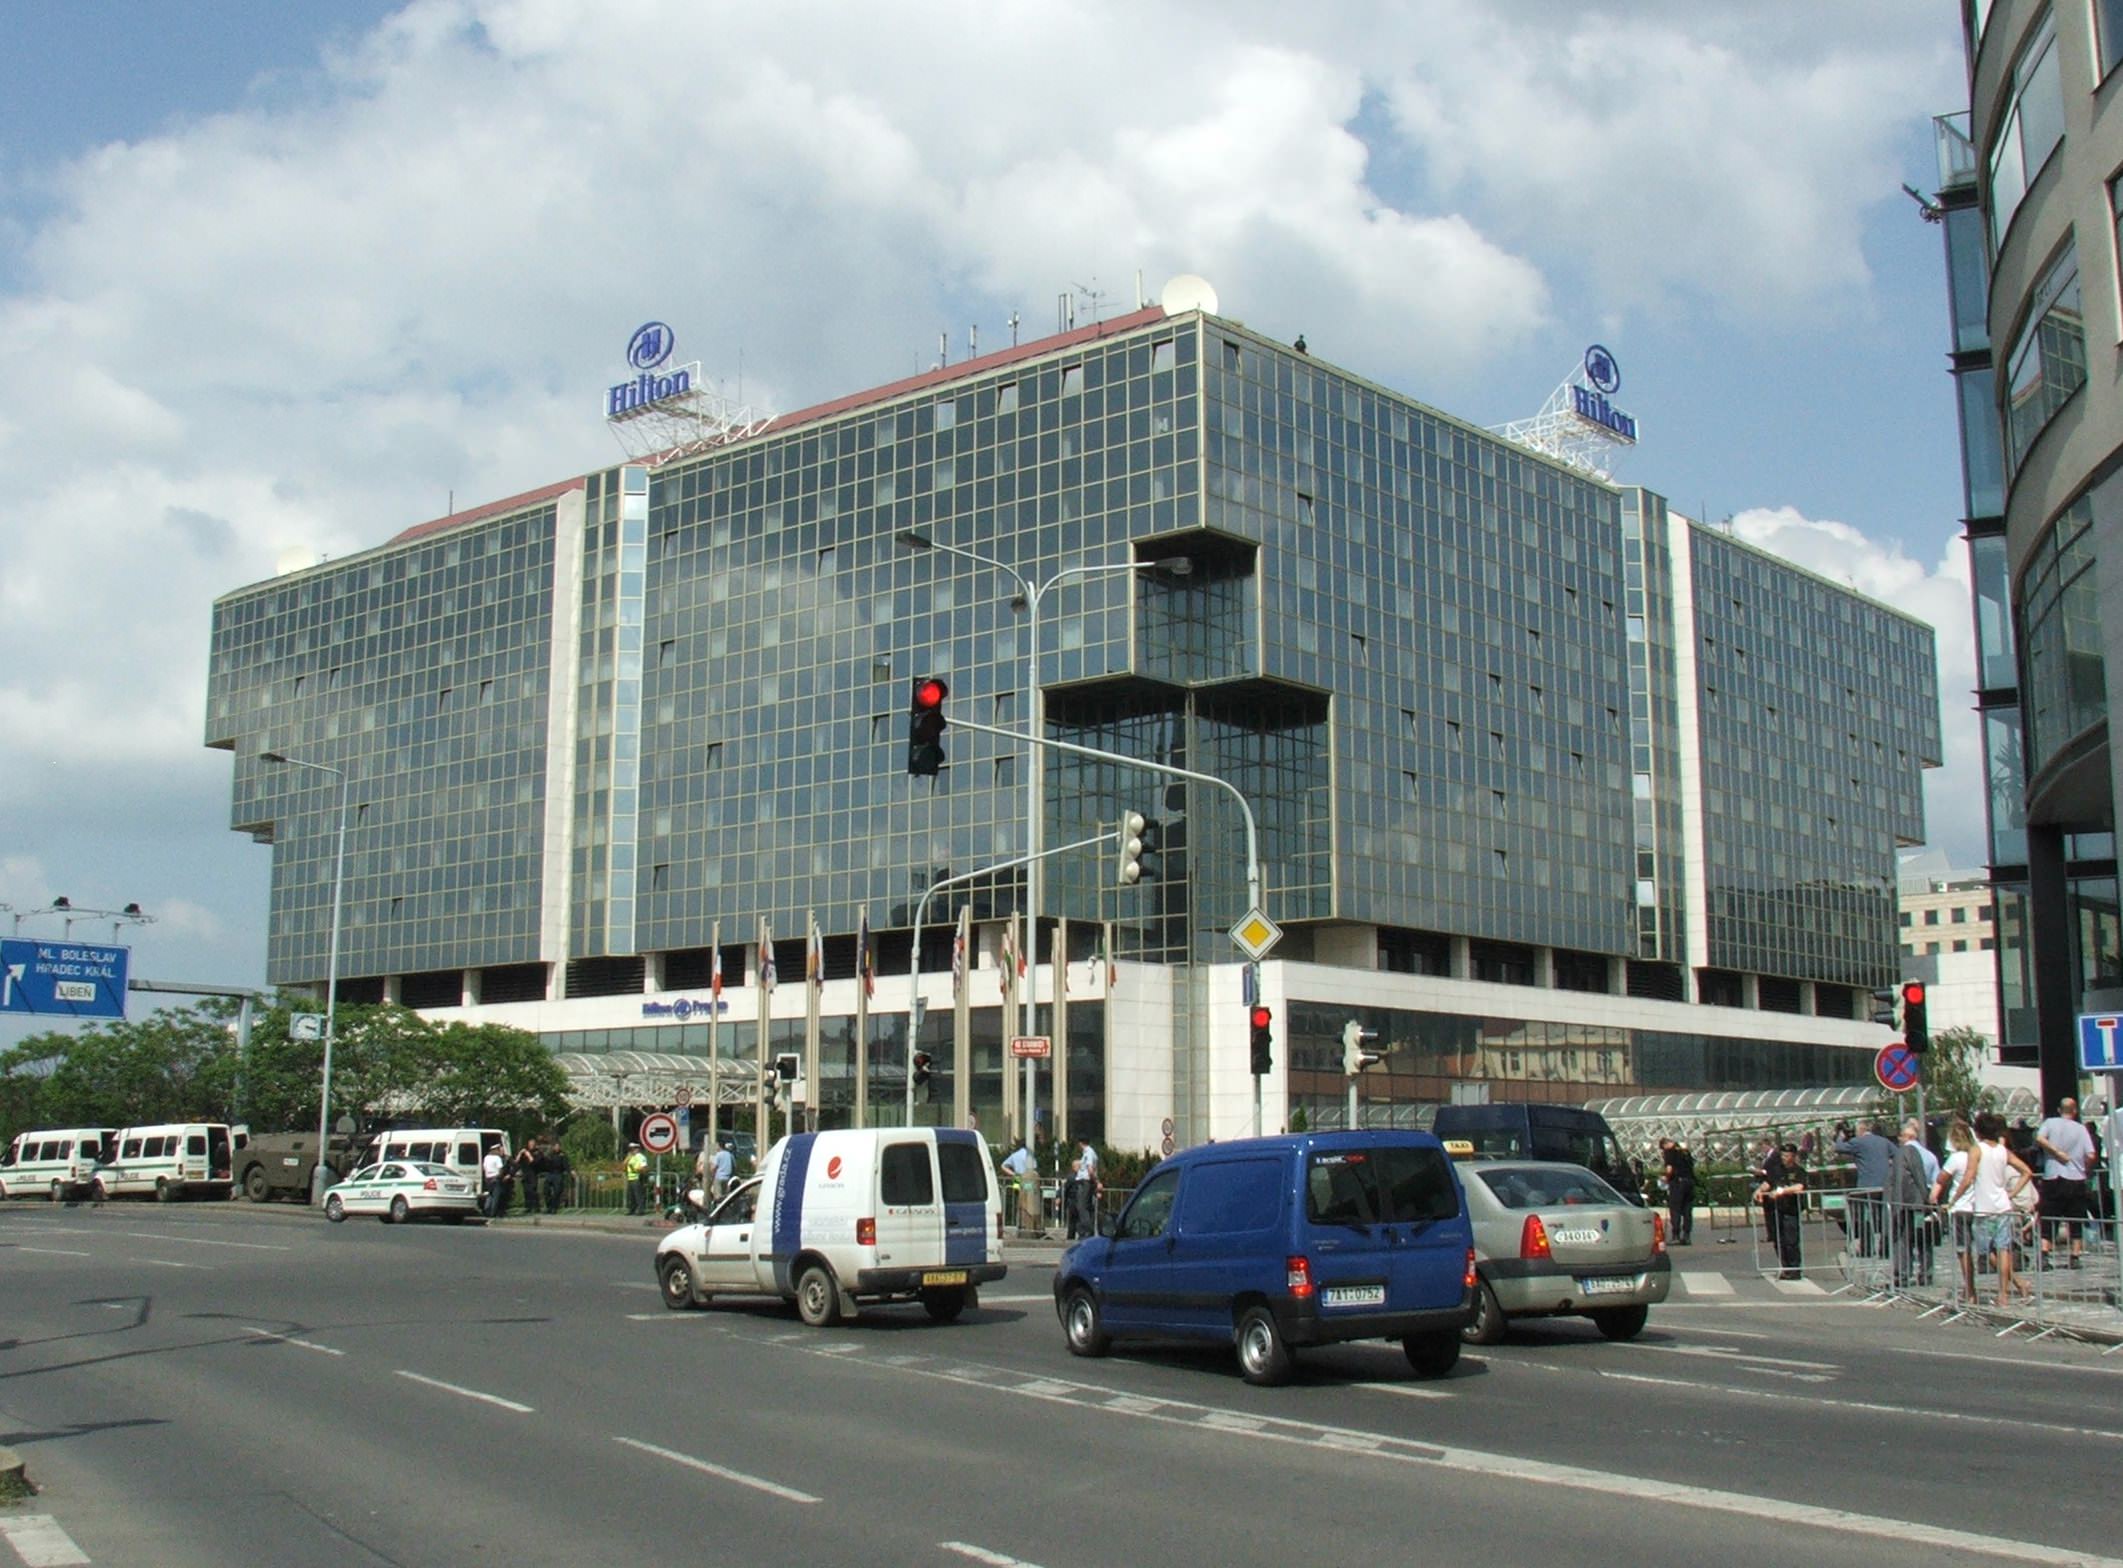 The Prague Hilton Hotel